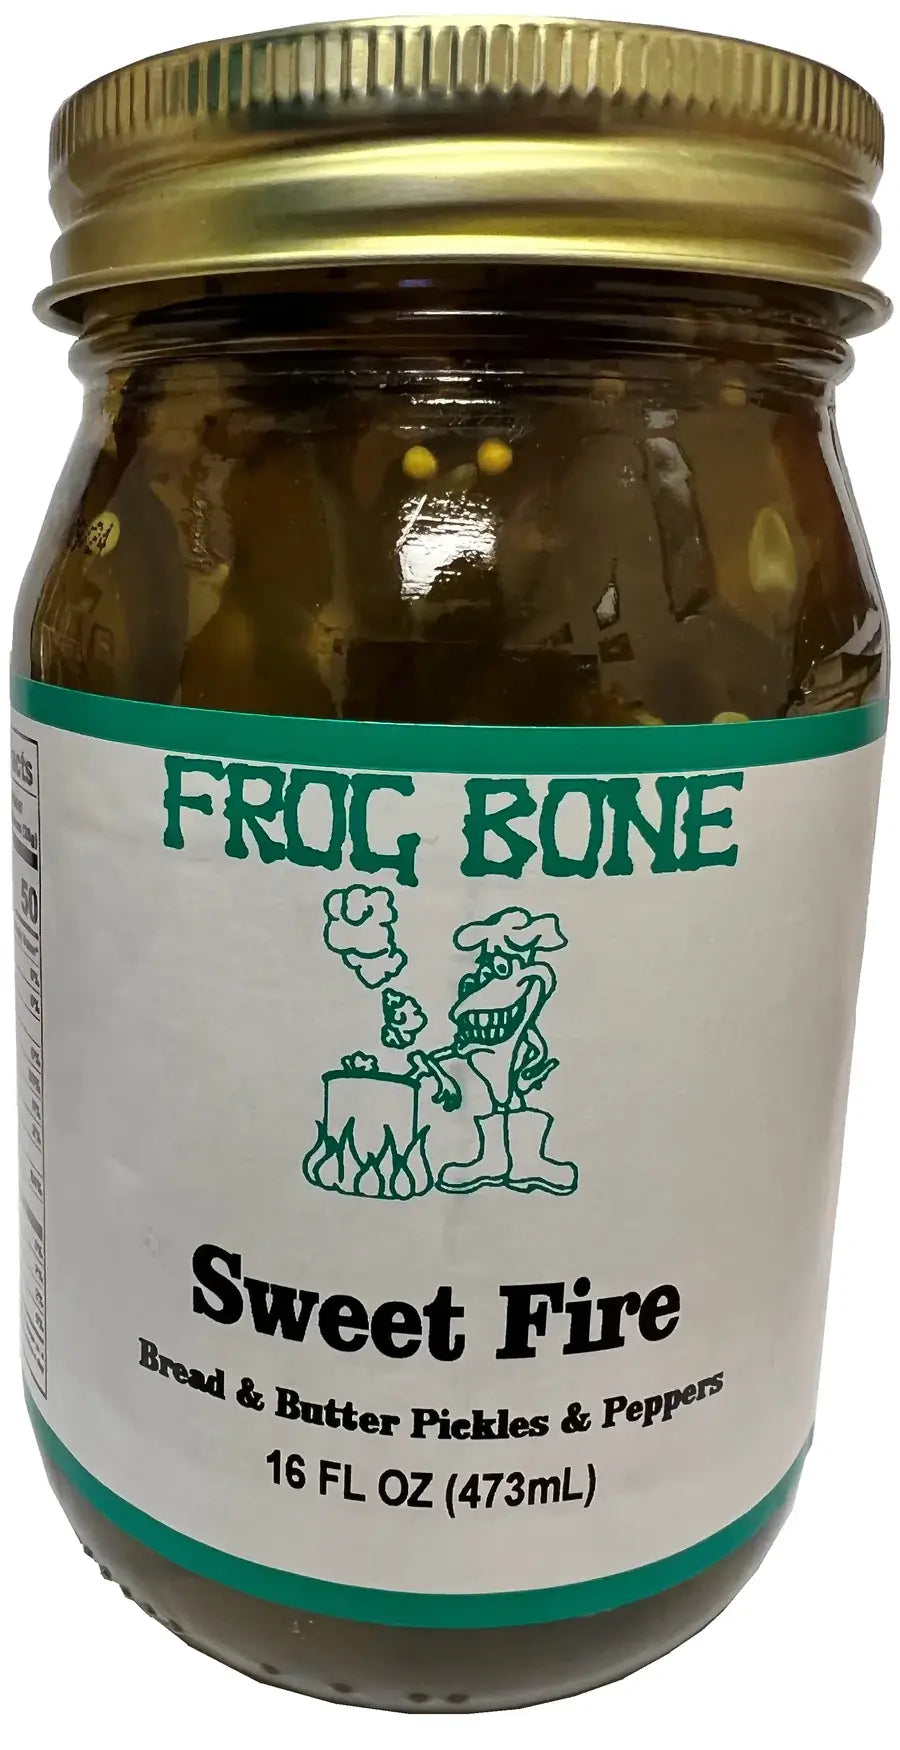 Frog Bone Sweet Fire Pickles & Peppers